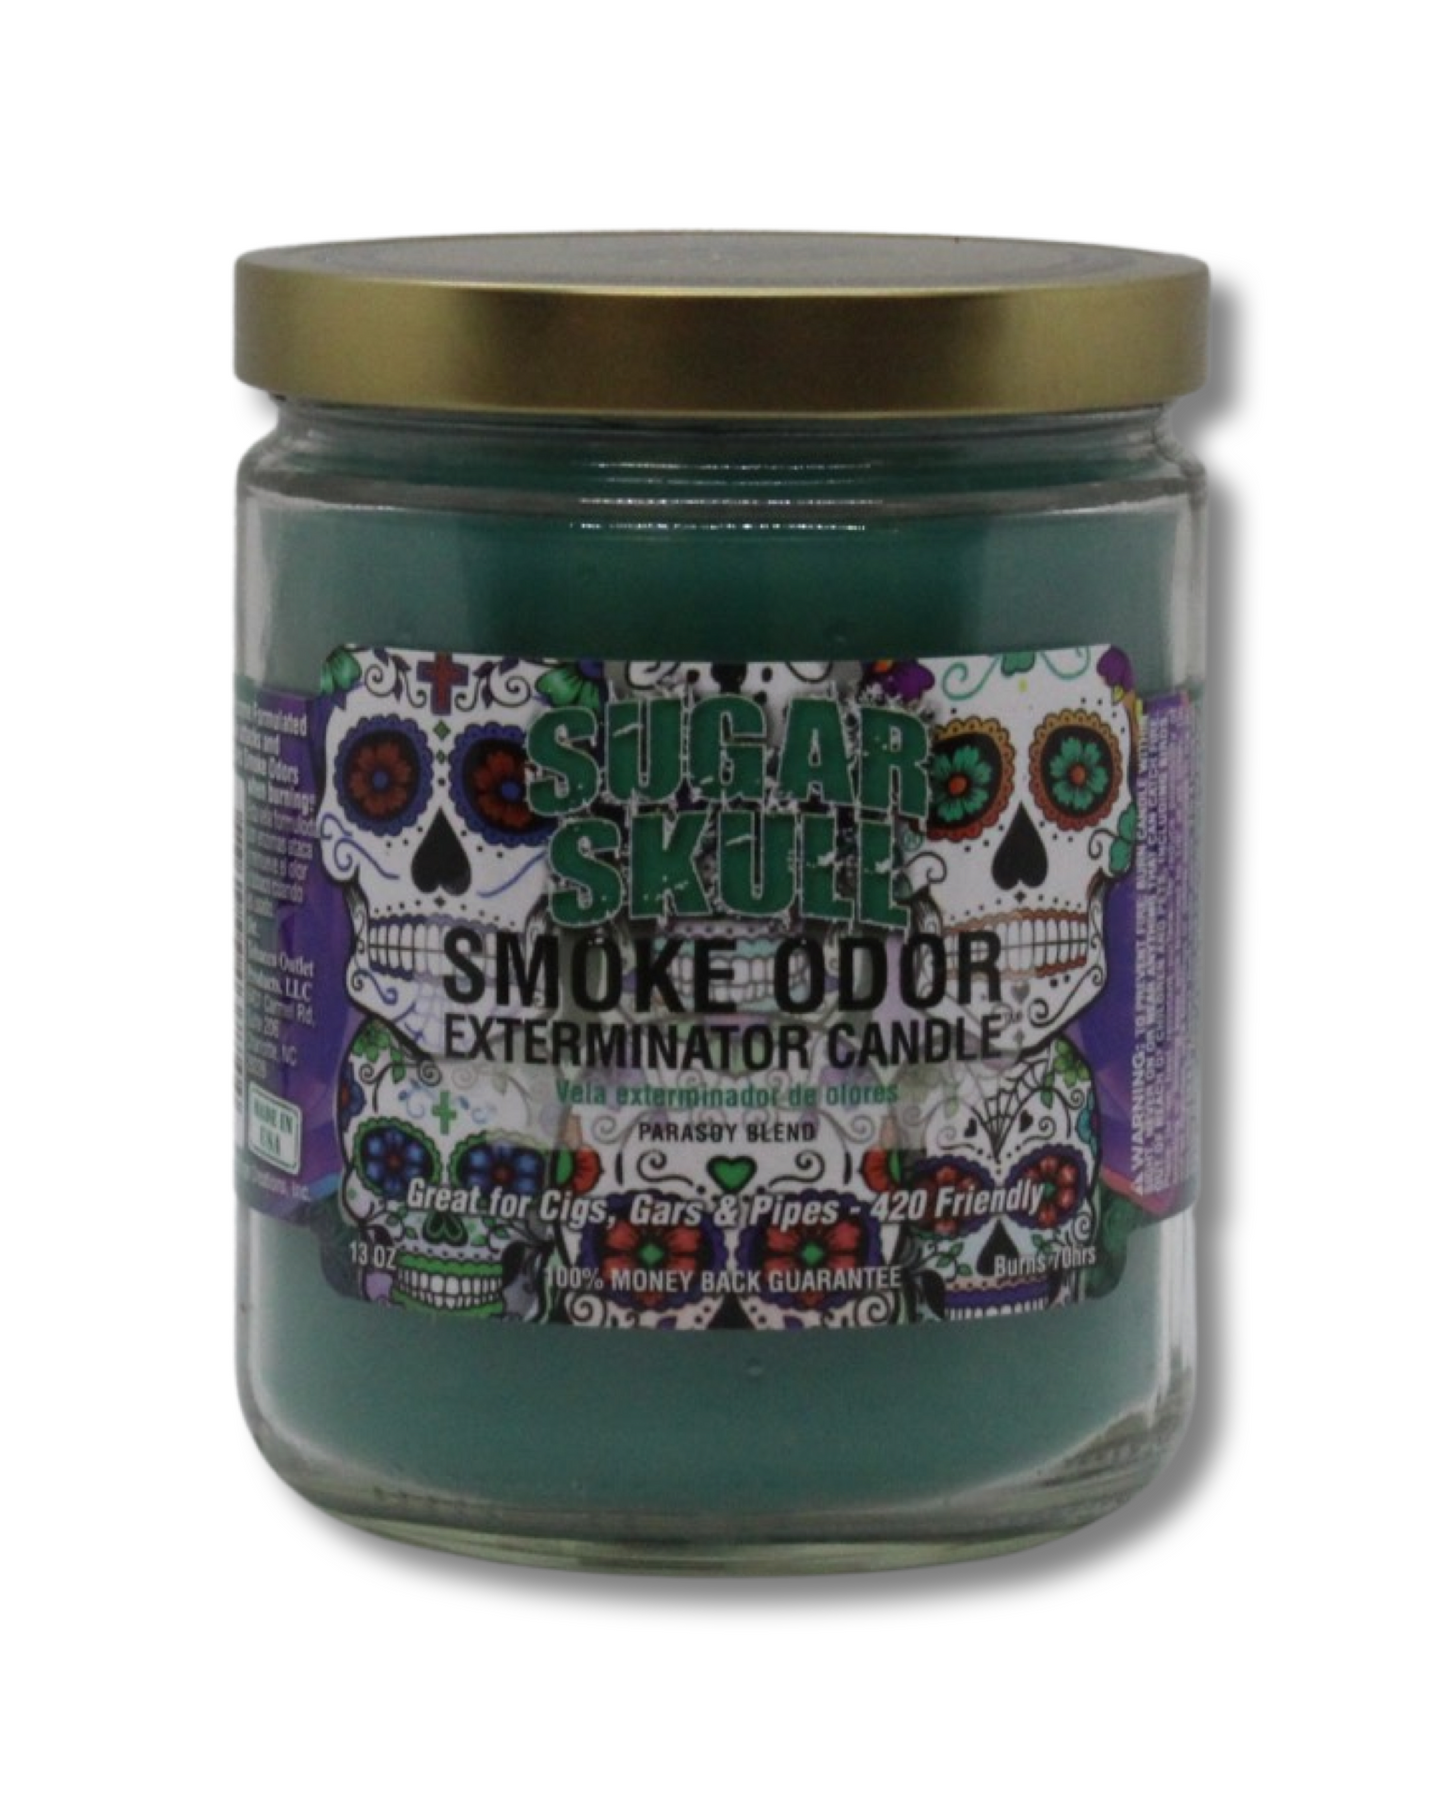 Smoke Odor Exterminator Candle - Sugar Skull